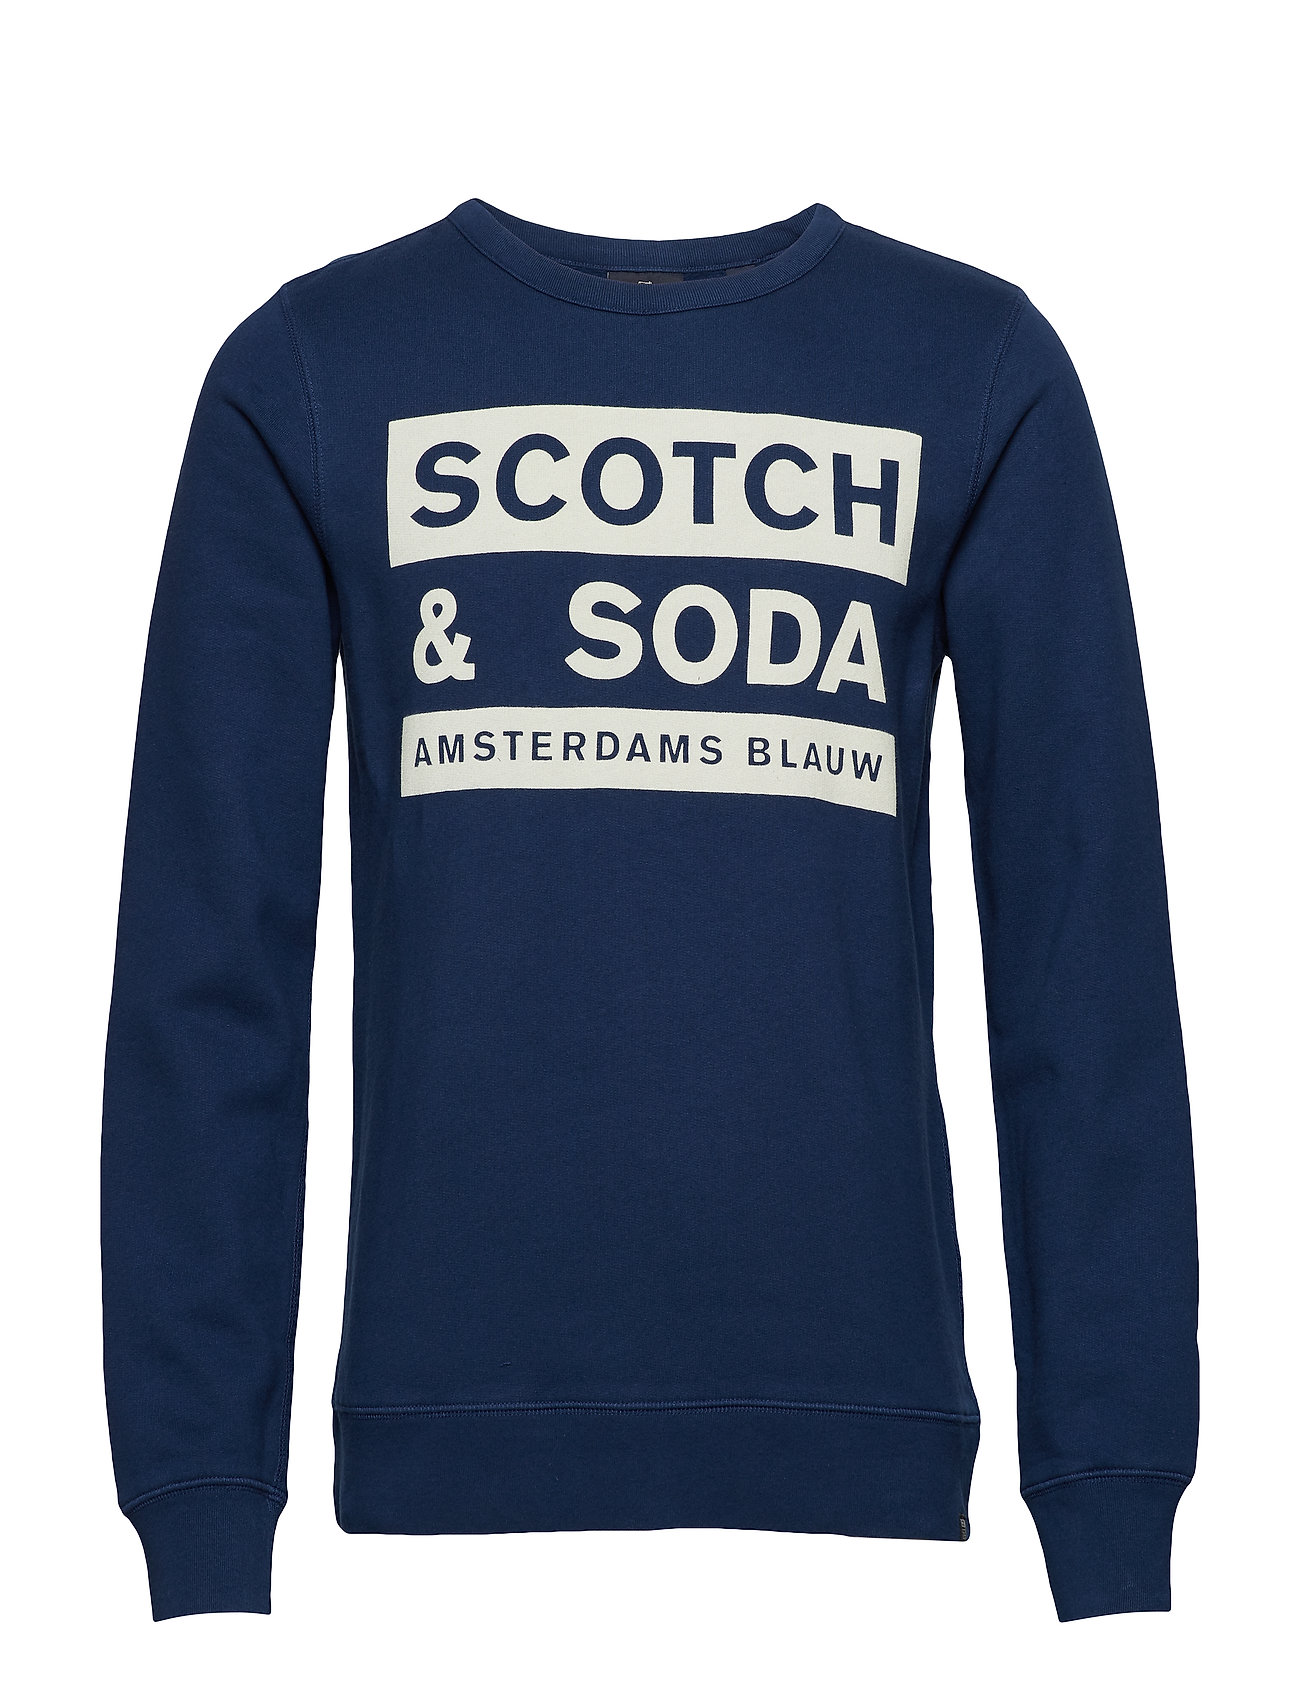 Scotch And Soda Ams Blauw Graphic Sweat (Teal Navy) (£47.40) - Scotch ...